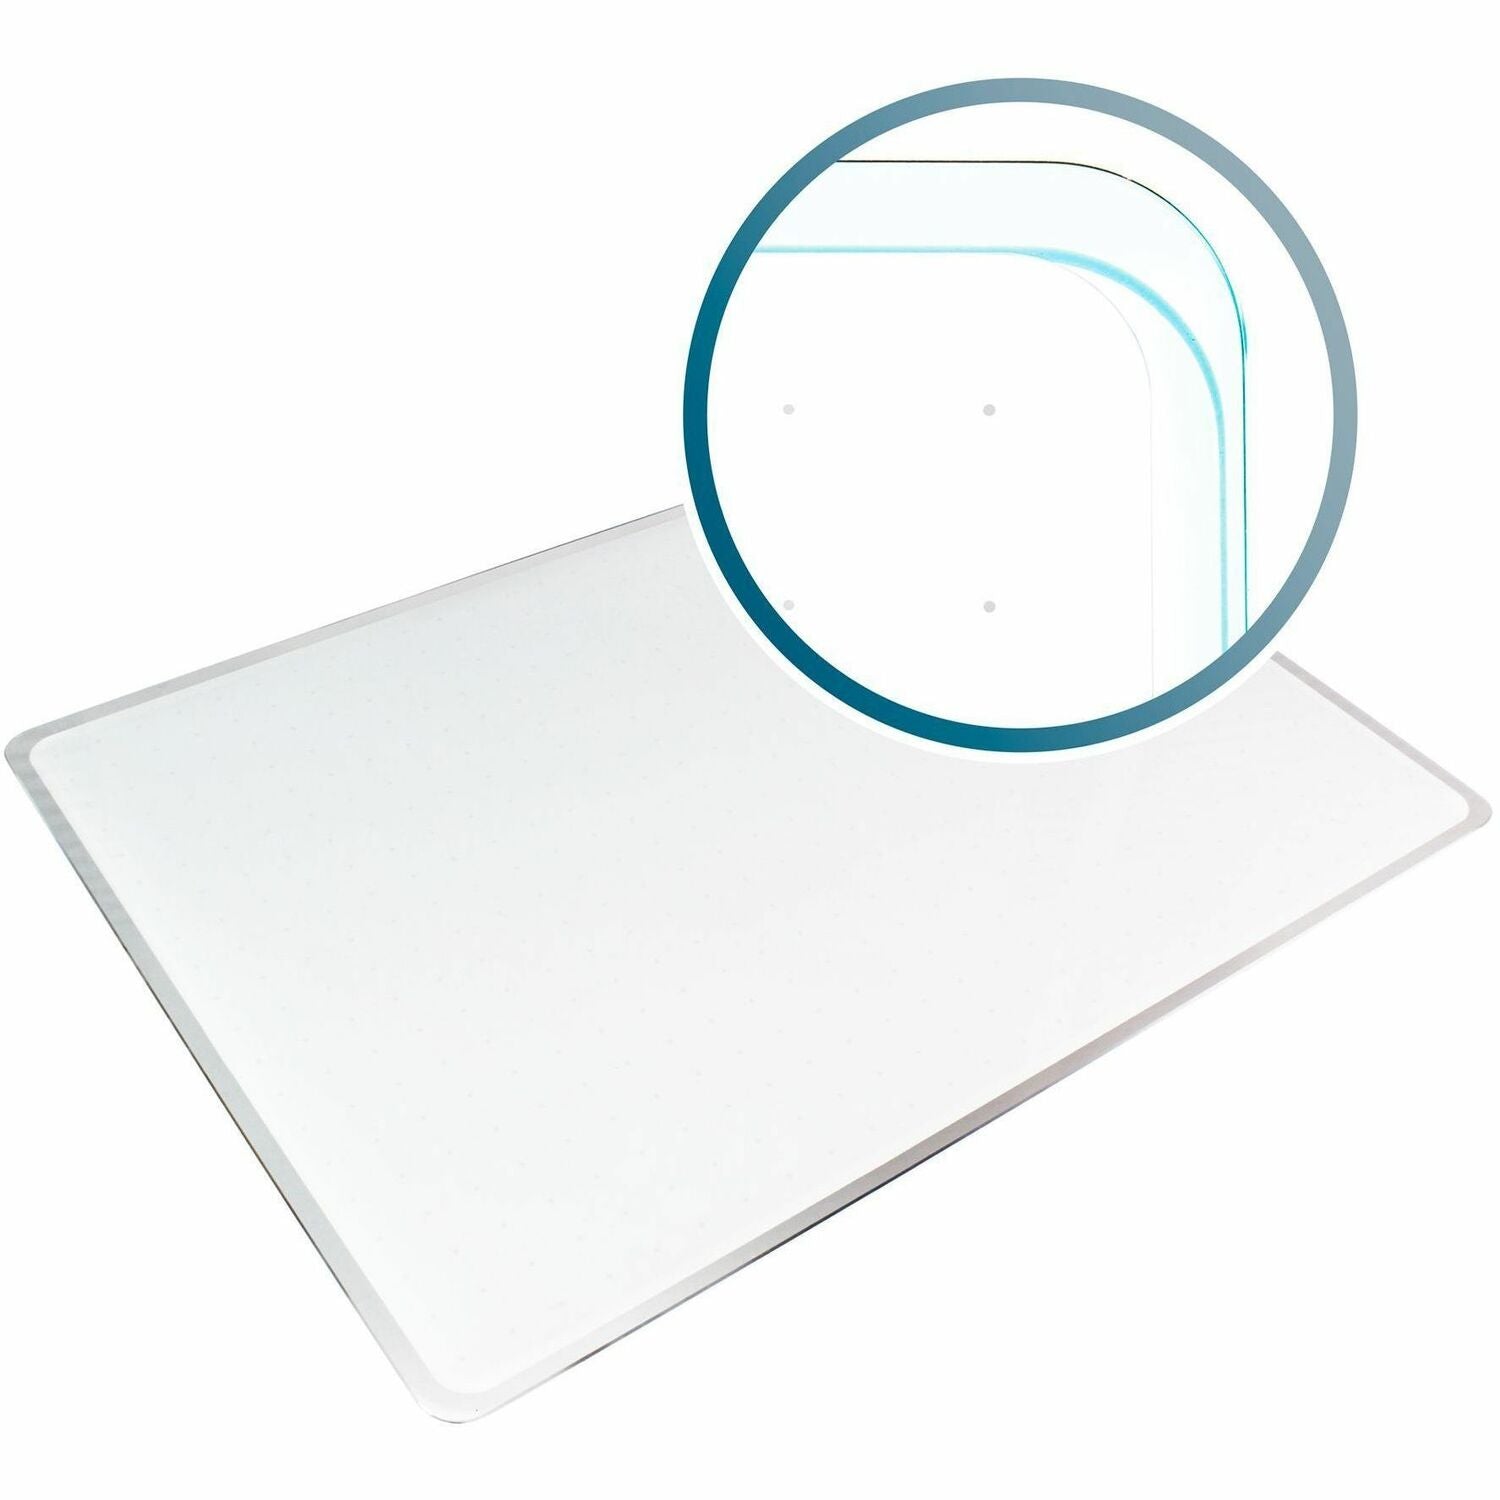 viztex-glacier-white-multi-purpose-grid-glass-dry-erase-board-24-x-36-provides-highly-effective-visual-communication-and-organization-using-the-multi-use-grid-design_flrfcvgm2436wg - 1